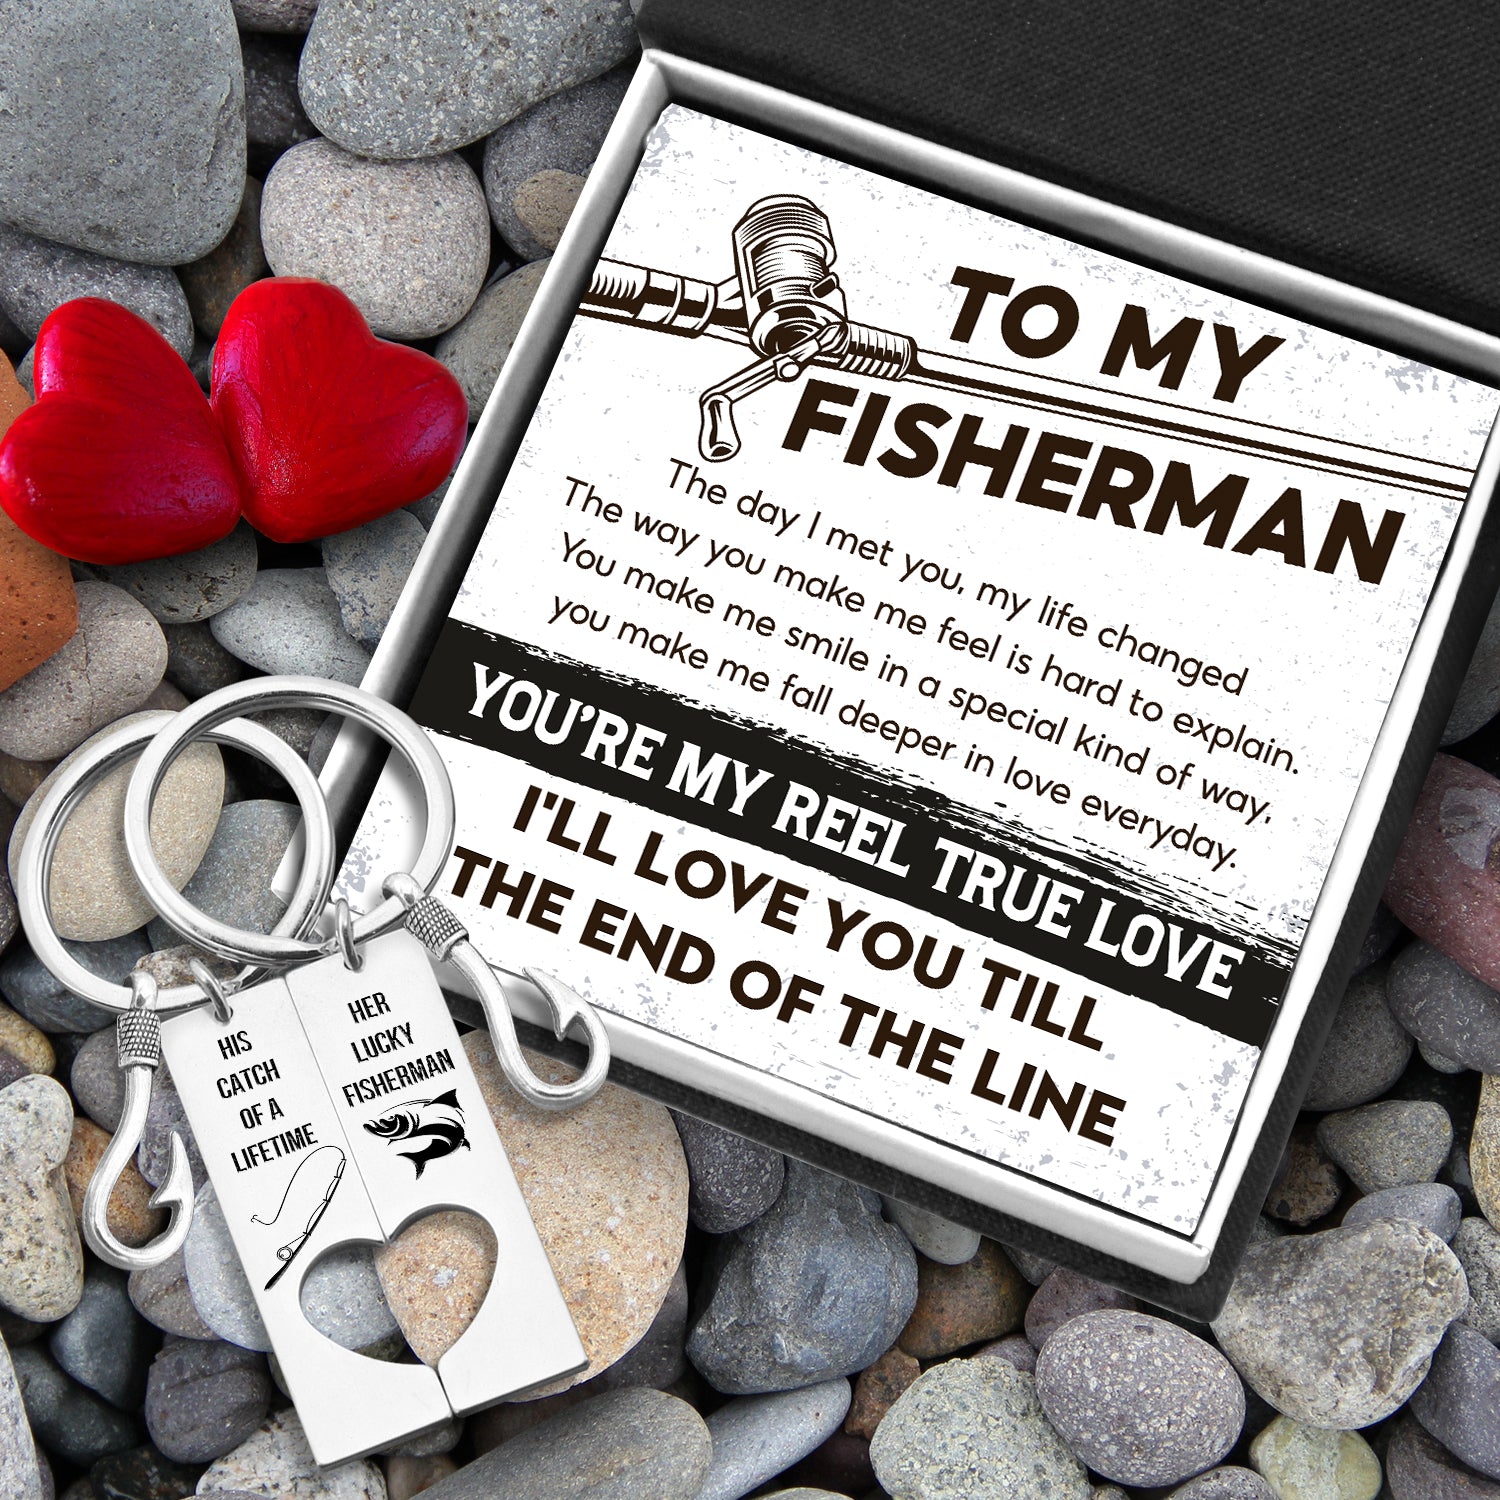 Black Leather Bracelet Fish Bone - Fishing - To My Fish Whisperer - Yo -  Love My Soulmate